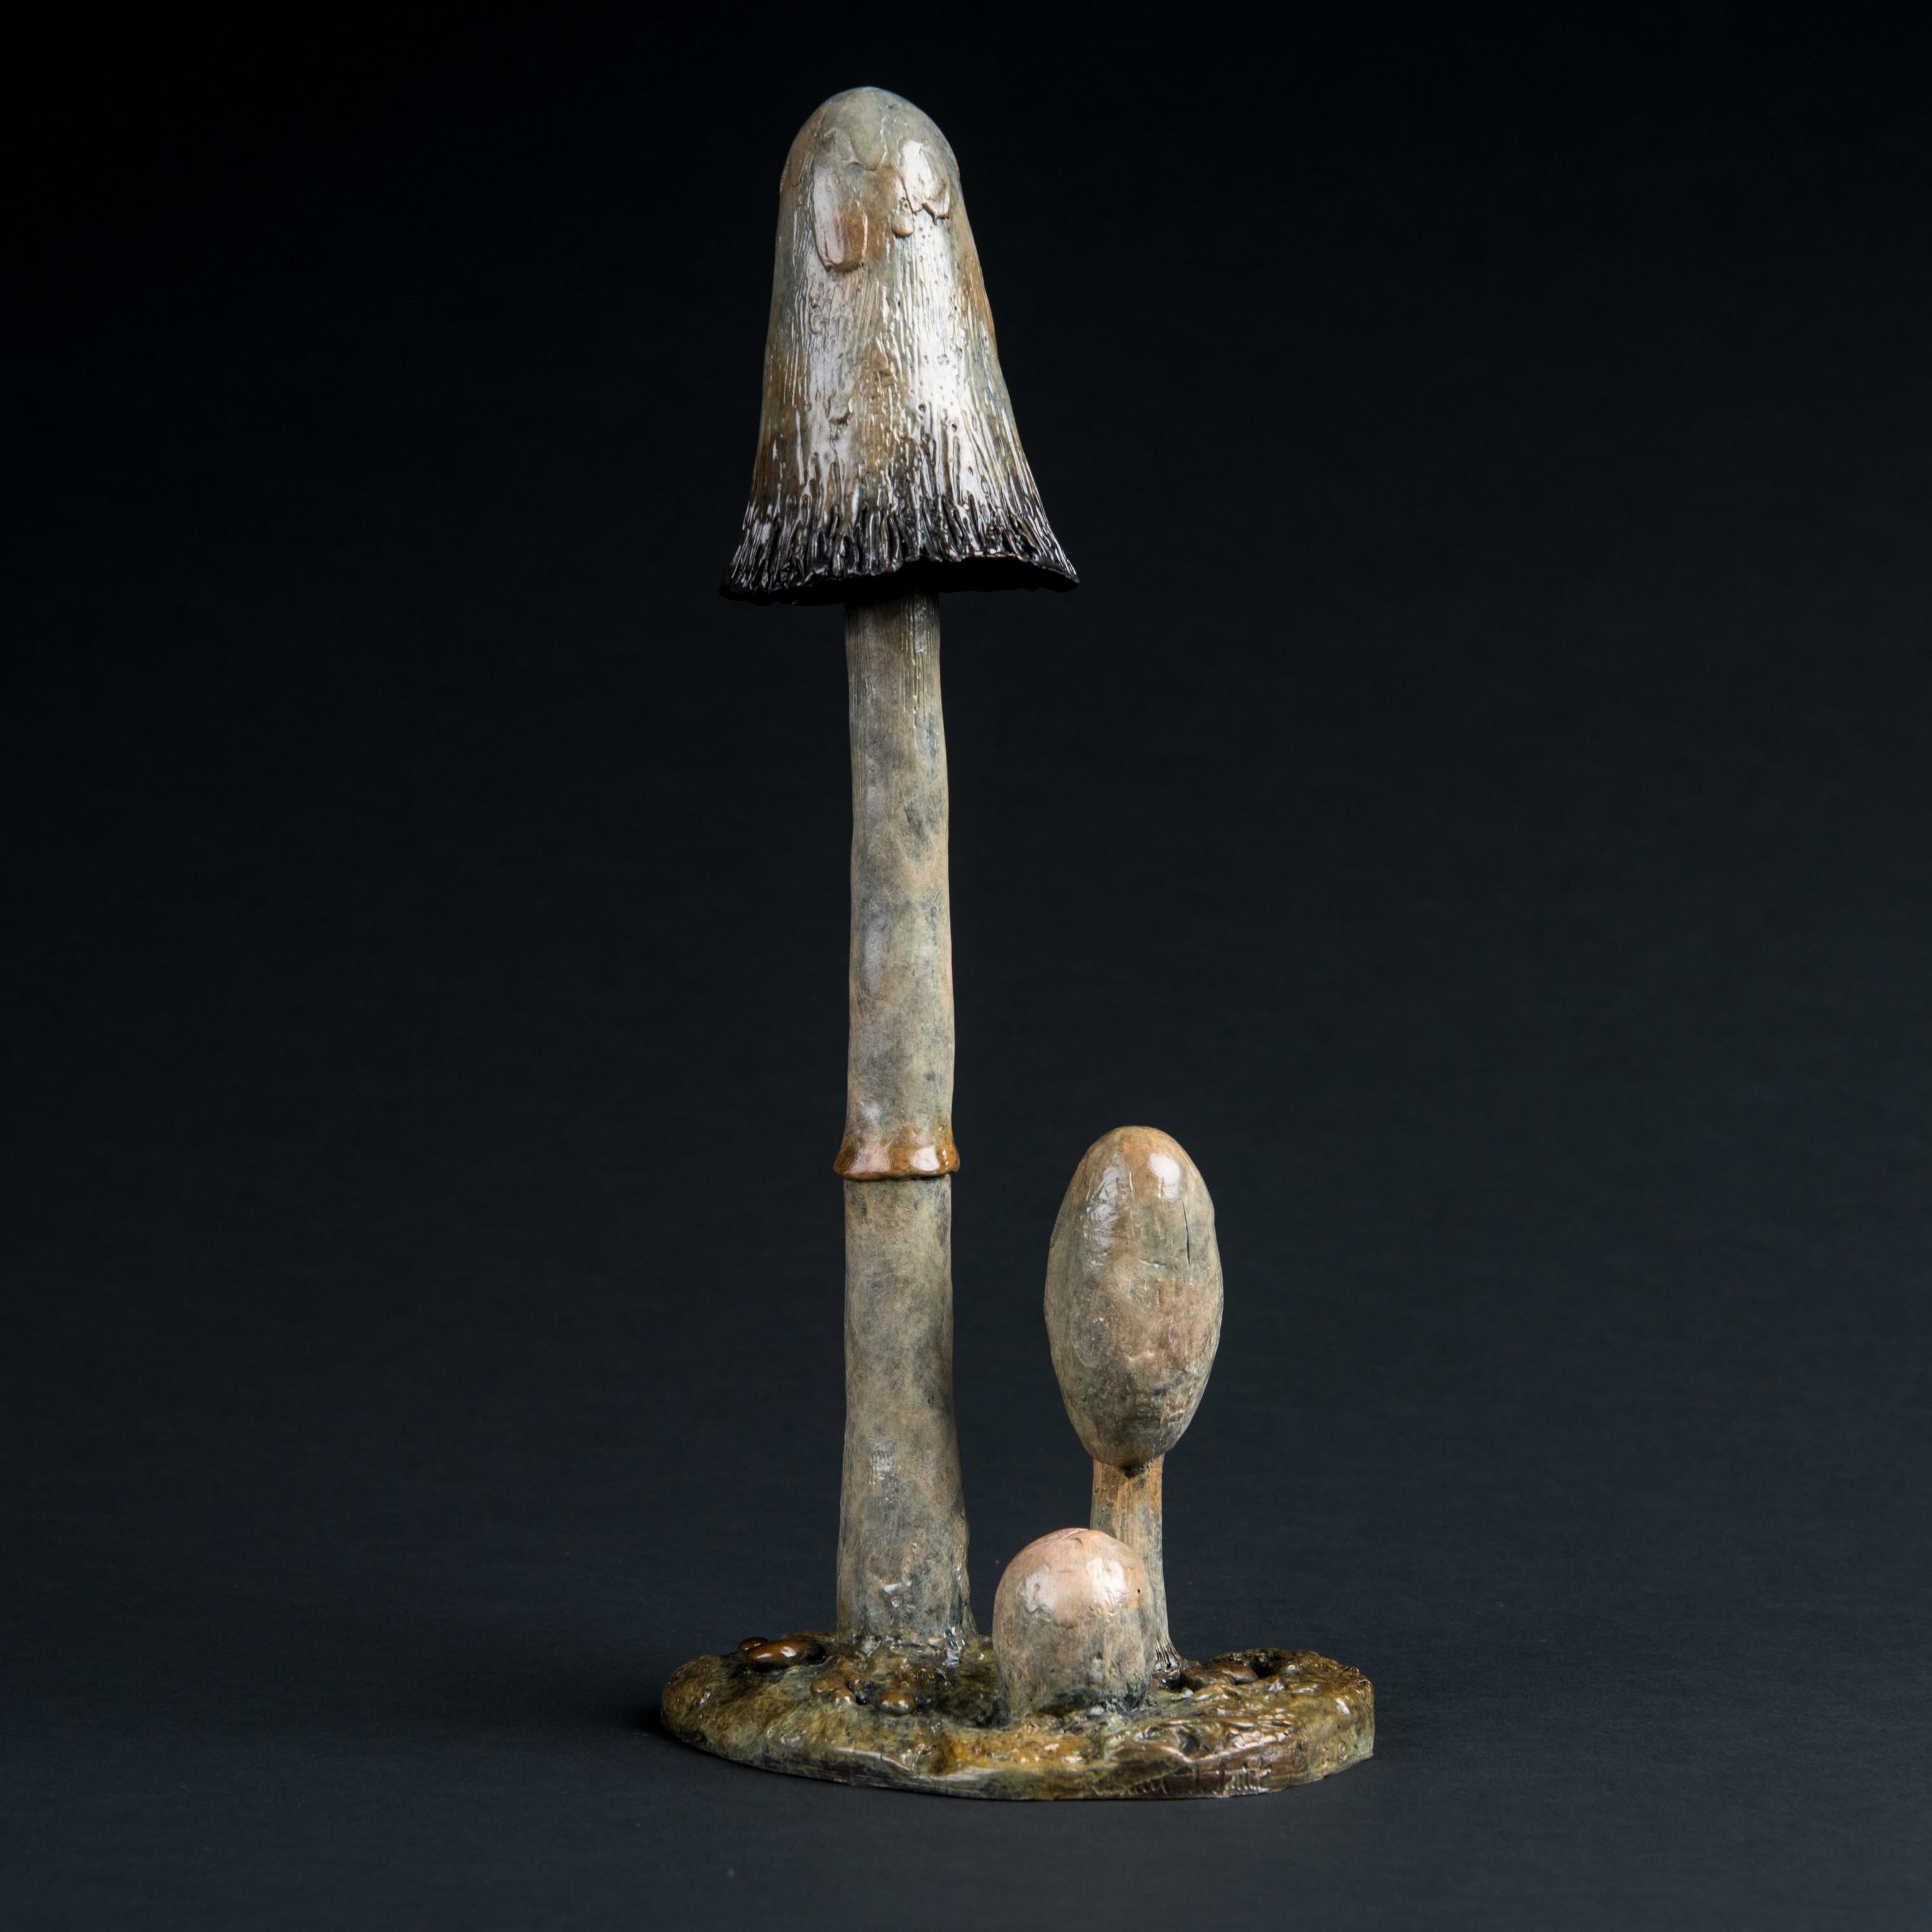 Still-Life Sculpture Richard Smith - Shaggy Ink Cap Mushroom" Sculpture contemporaine en bronze d'un champignon britannique.  